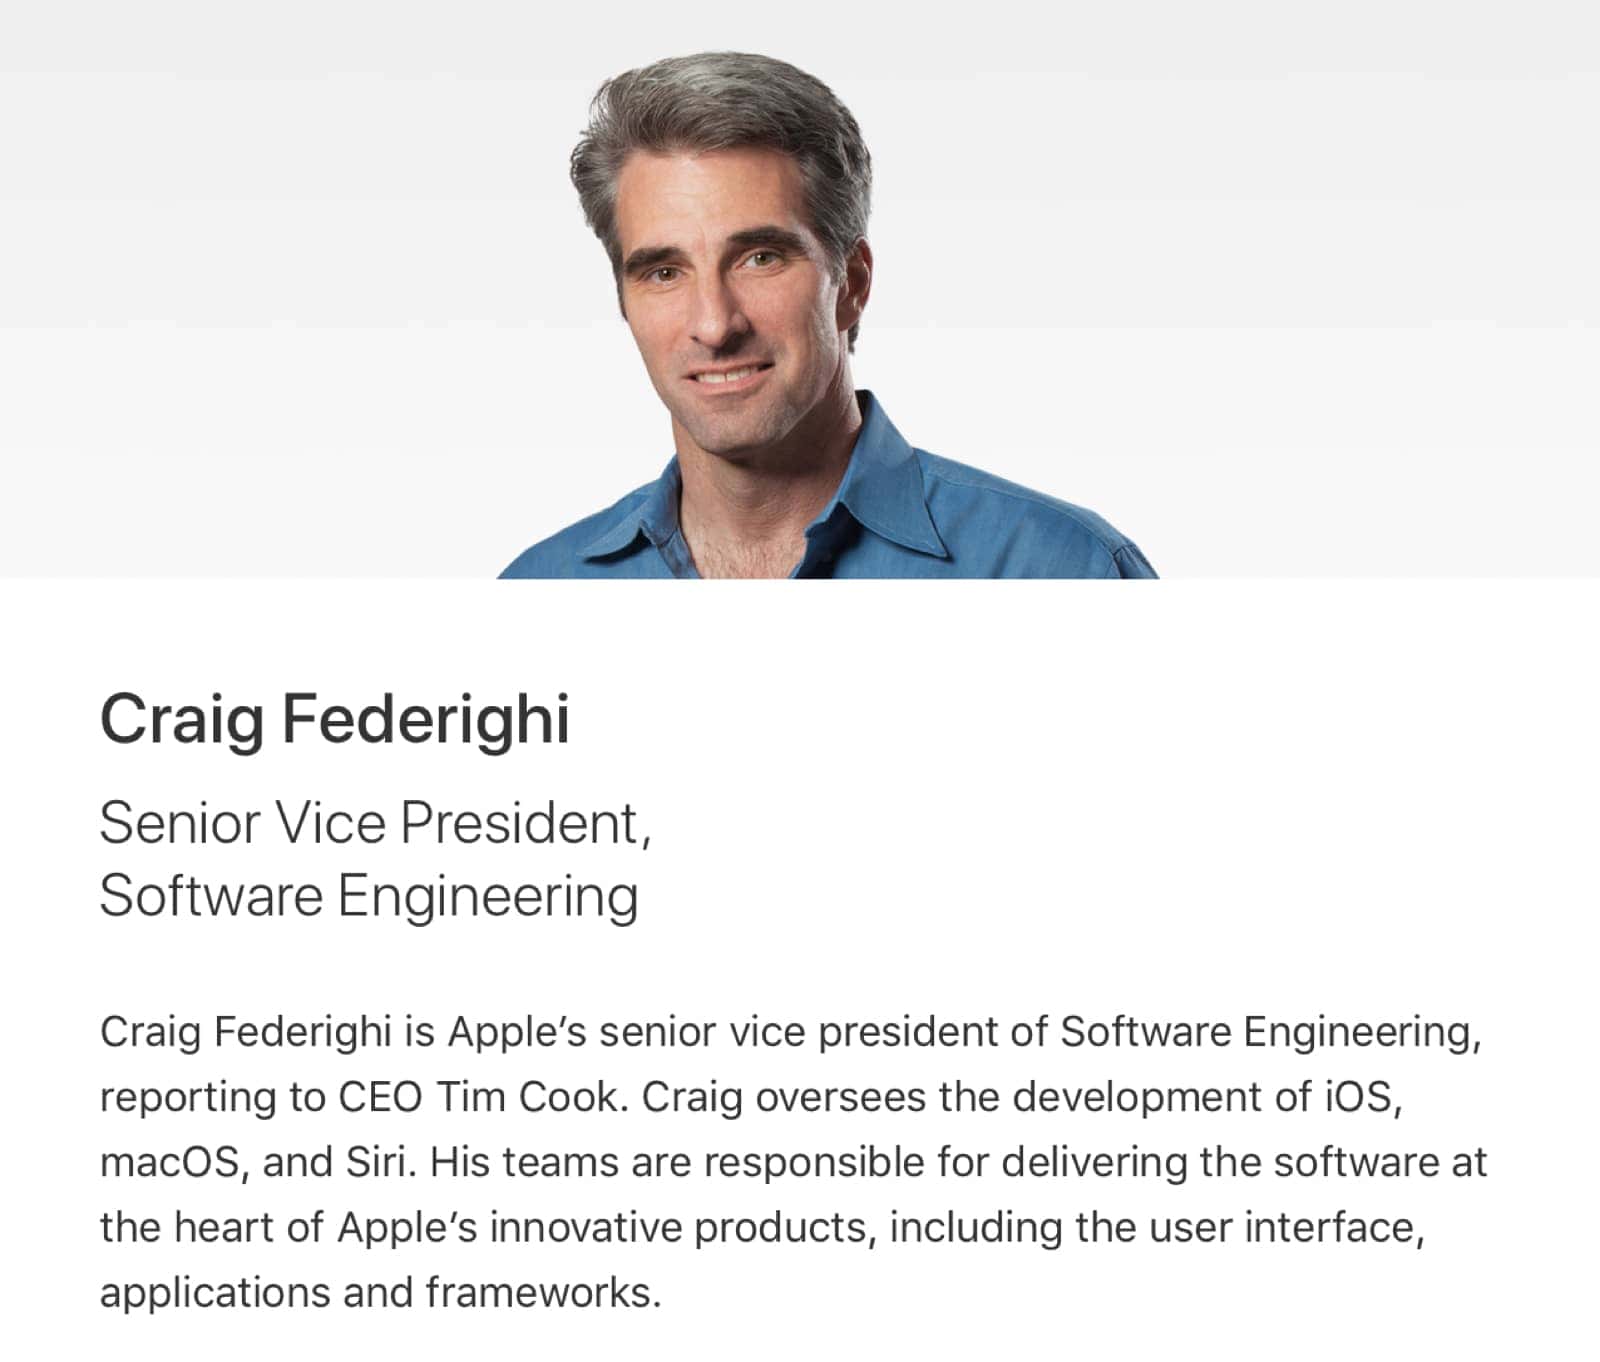 Craig's new bio page says he leads the Siri team.